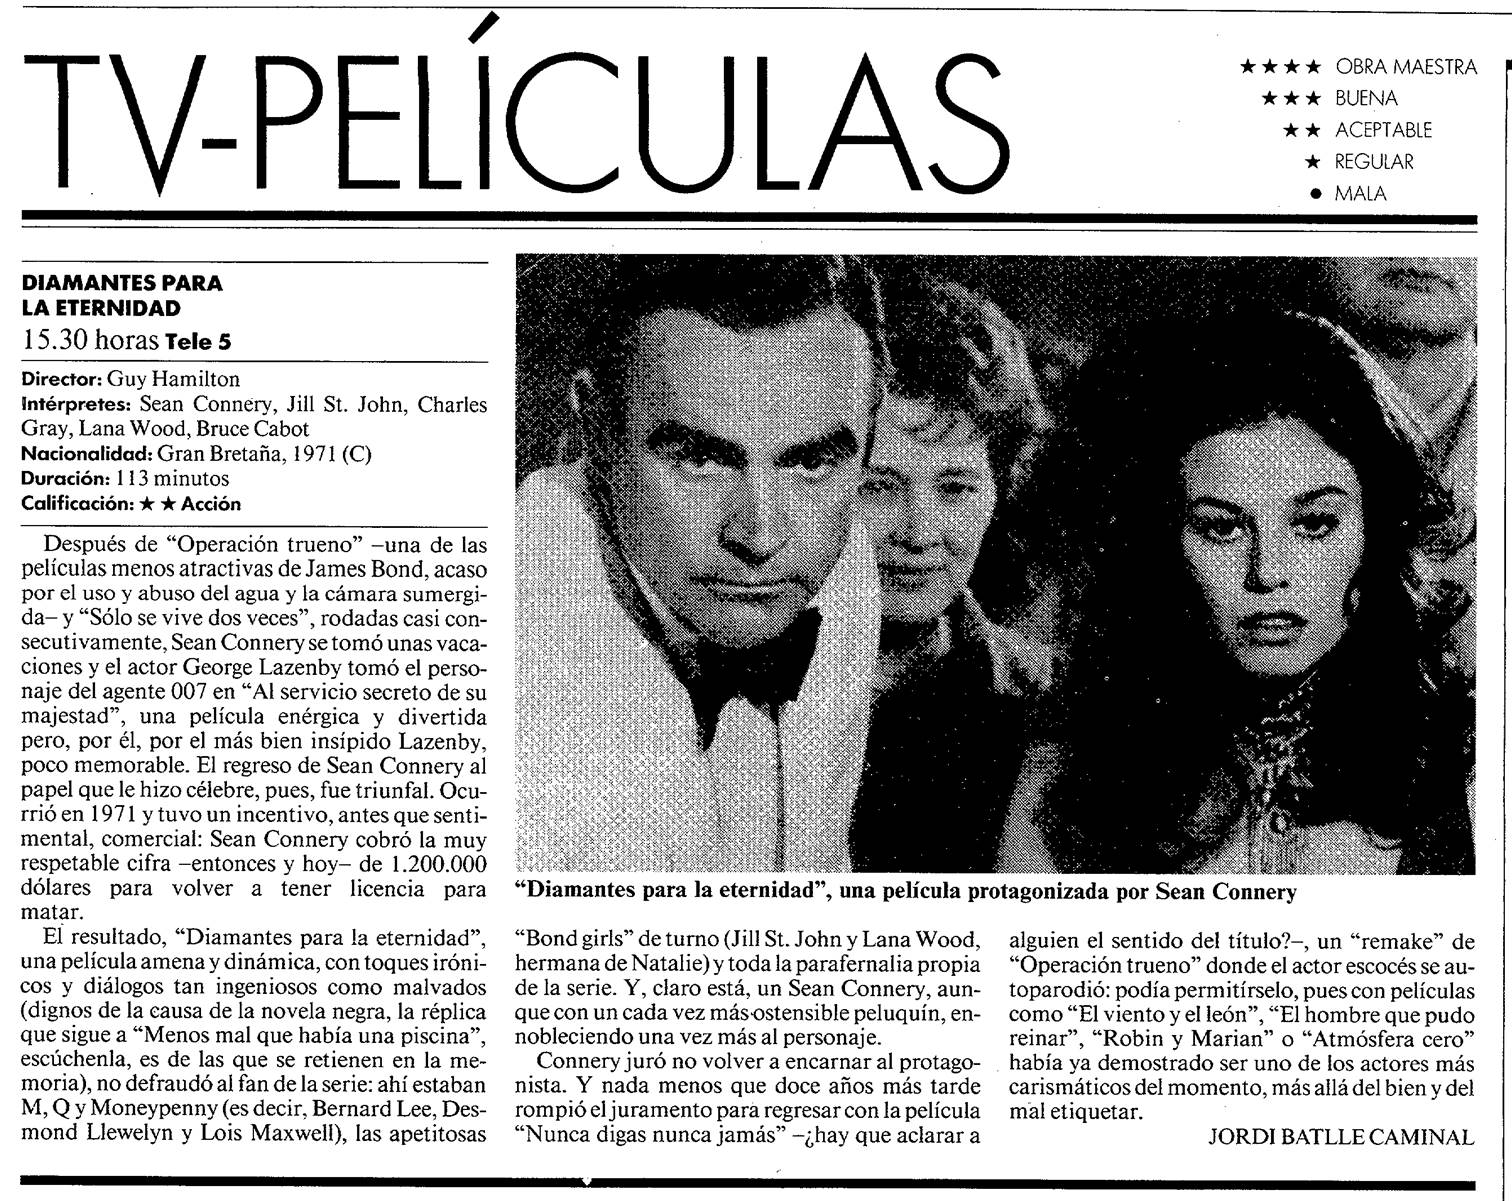 07 1994 02 19 La Vanguardia Revista 010 Tele5